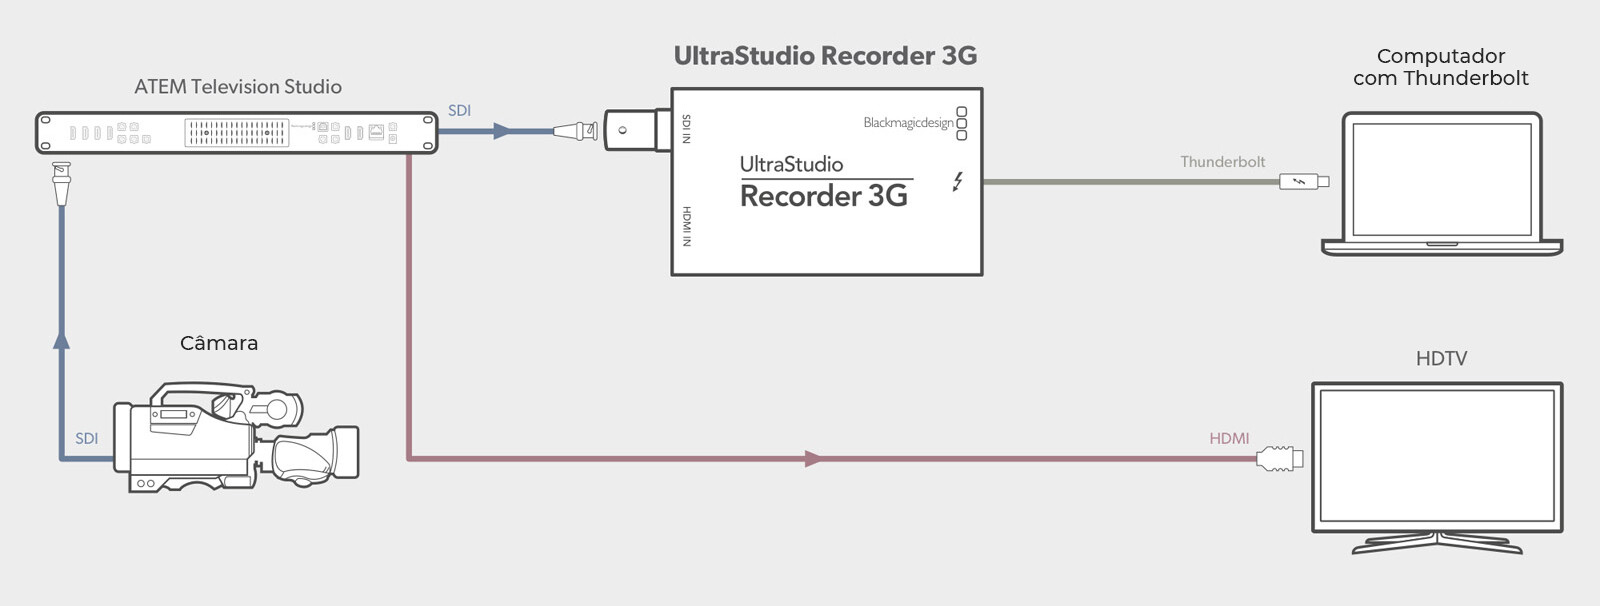 ultrastudio-recorder-3g-lg@2x copy